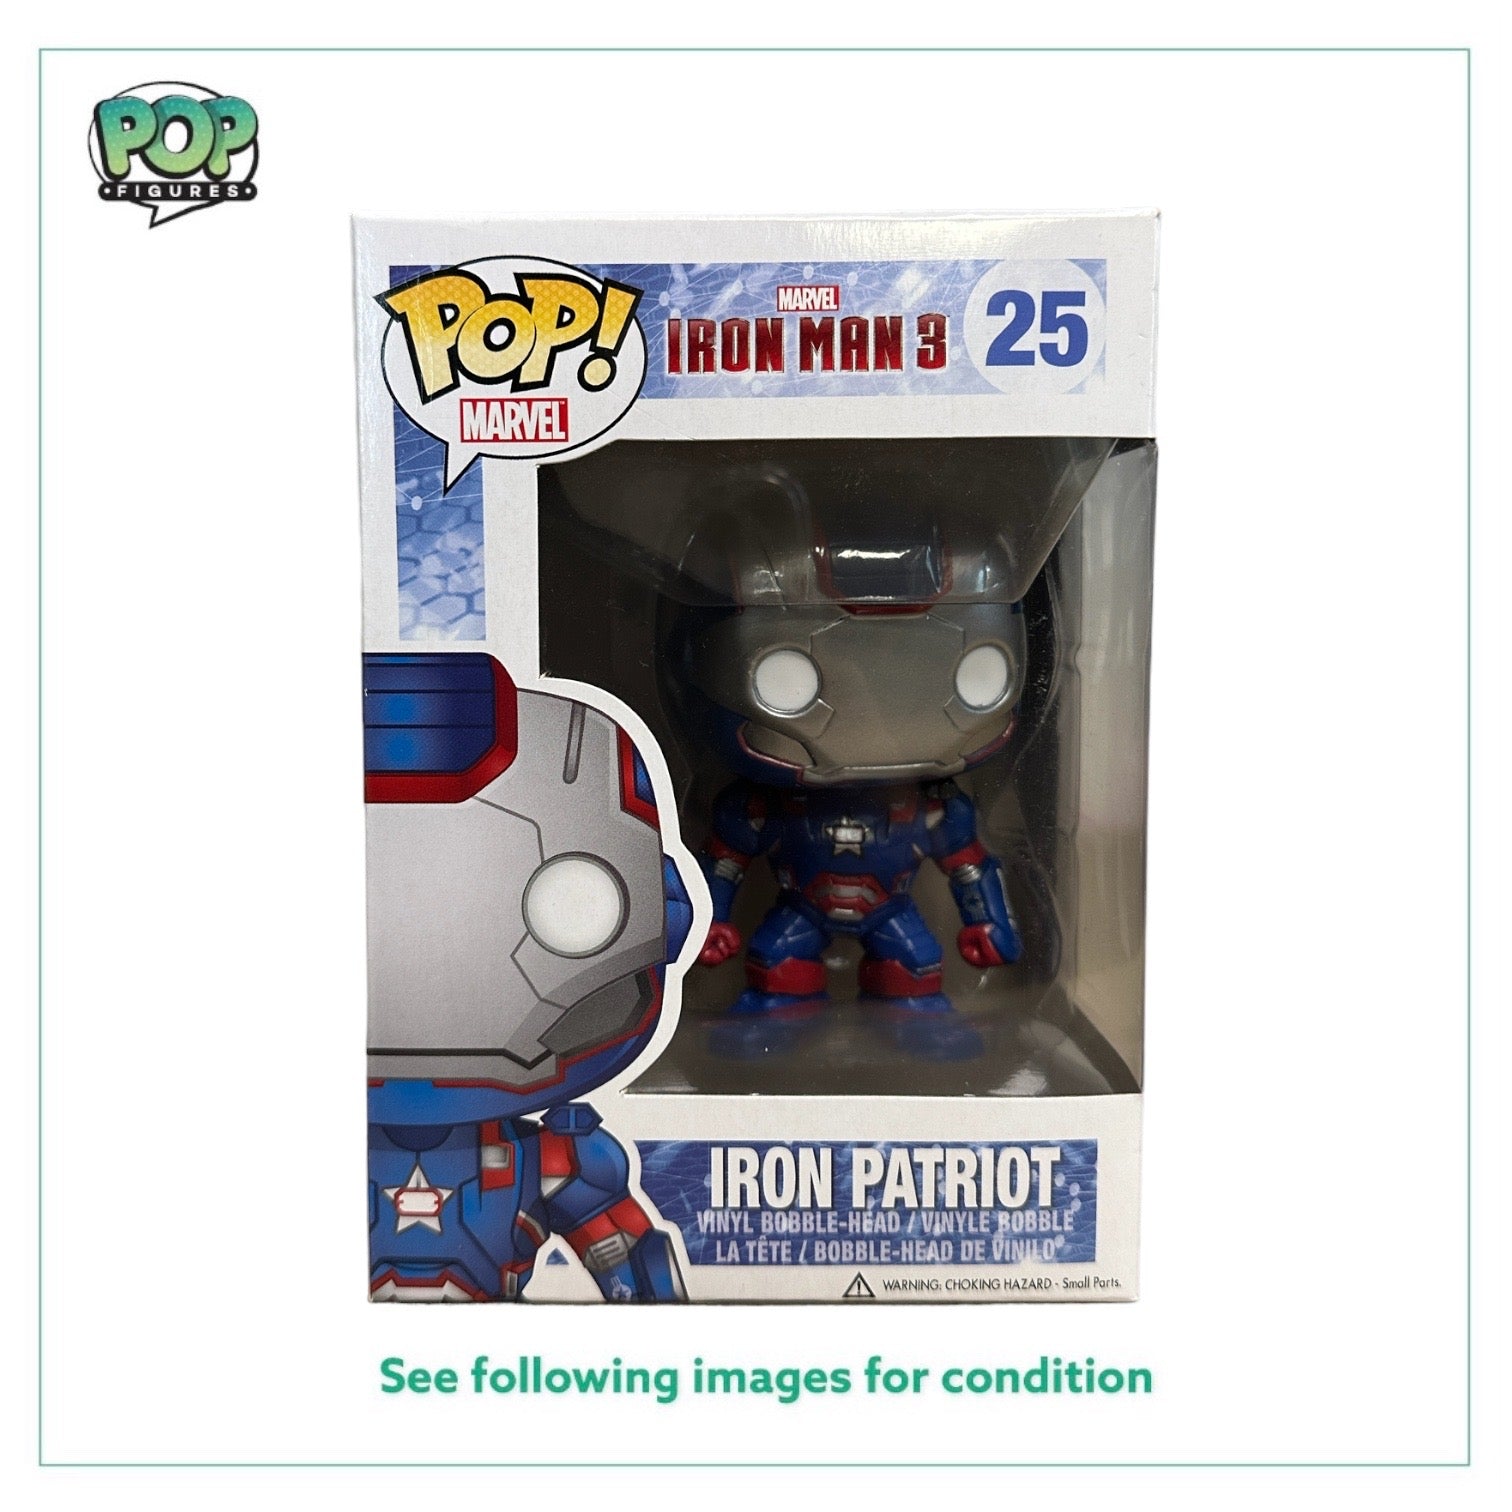 Iron Patriot #25 Funko Pop! - Iron Man 3 - 2013 Pop! - Condition 8.75/10